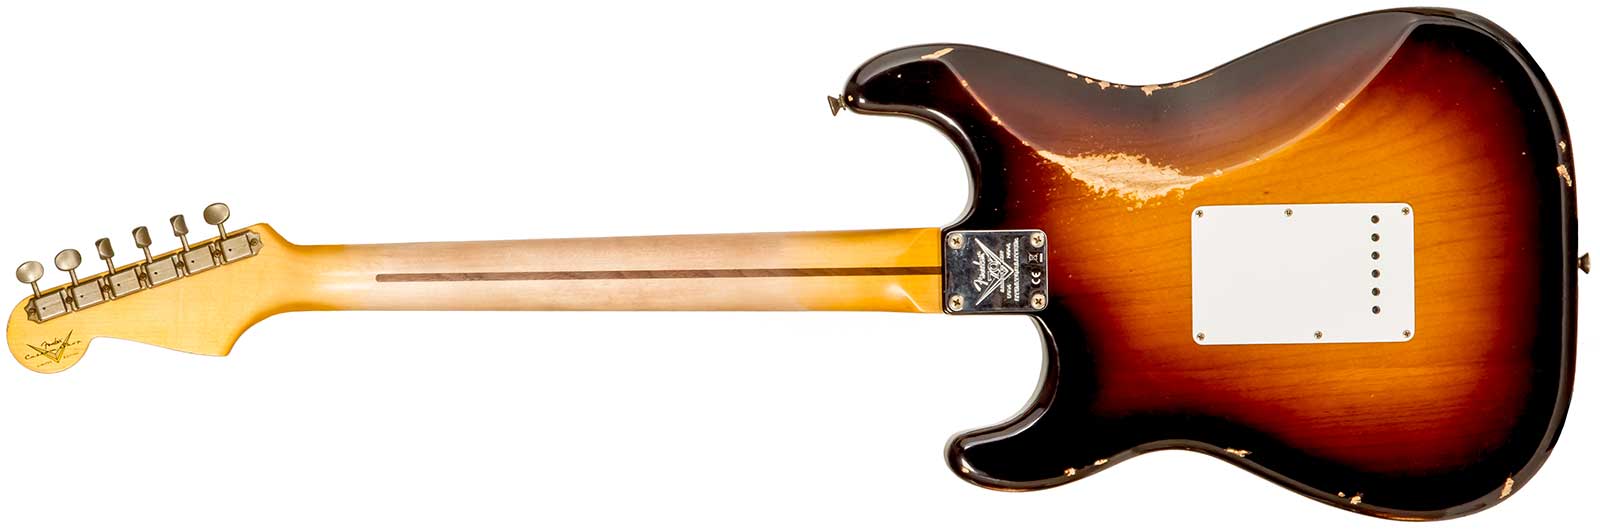 Fender Custom Shop Strat 1954 70th Anniv. 3s Trem Mn #xn4158 - Relic Wide-fade 2-color Sunburst - Elektrische gitaar in Str-vorm - Variation 1